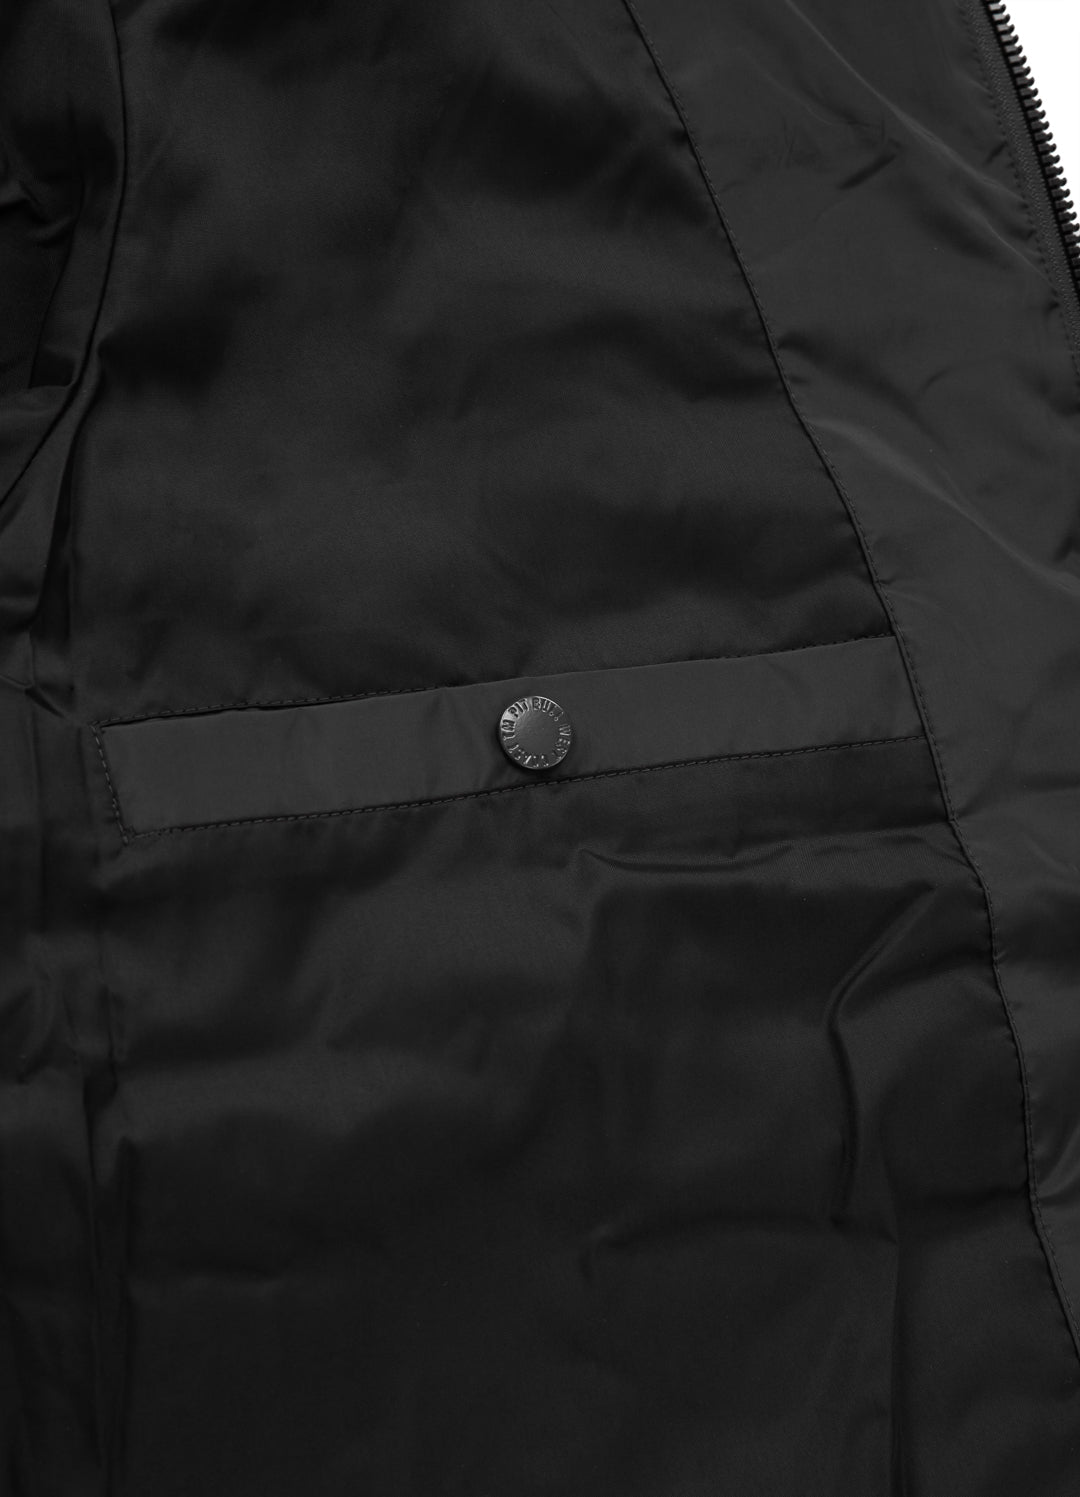 CARVER Black Quilted Hooded Jacket.